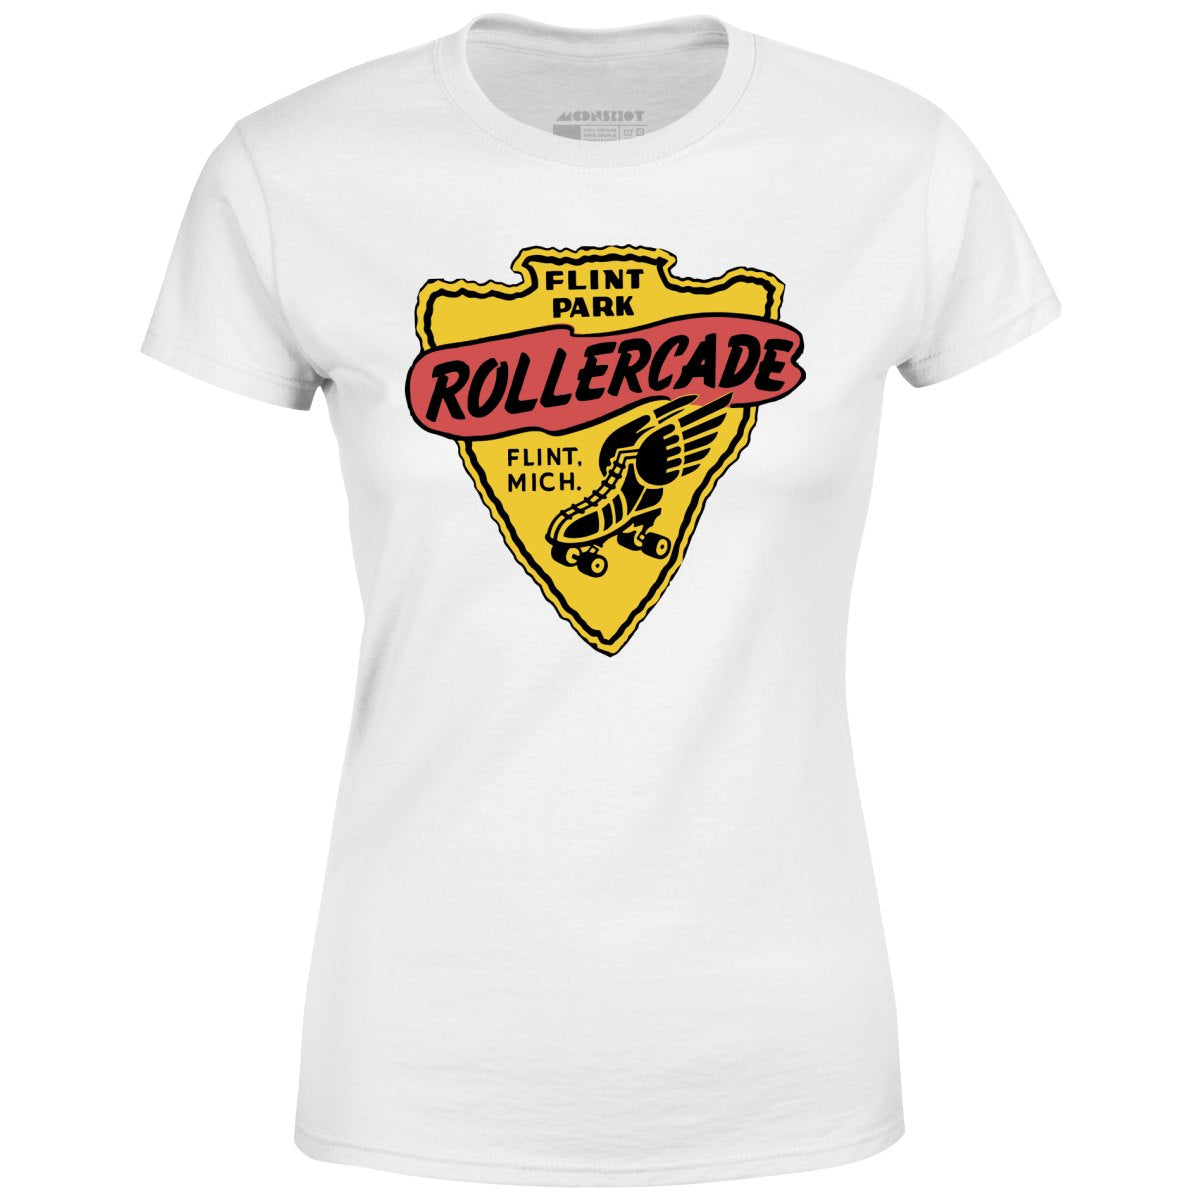 Flint Park Rollercade - Flint, MI - Vintage Roller Rink - Women's T-Shirt